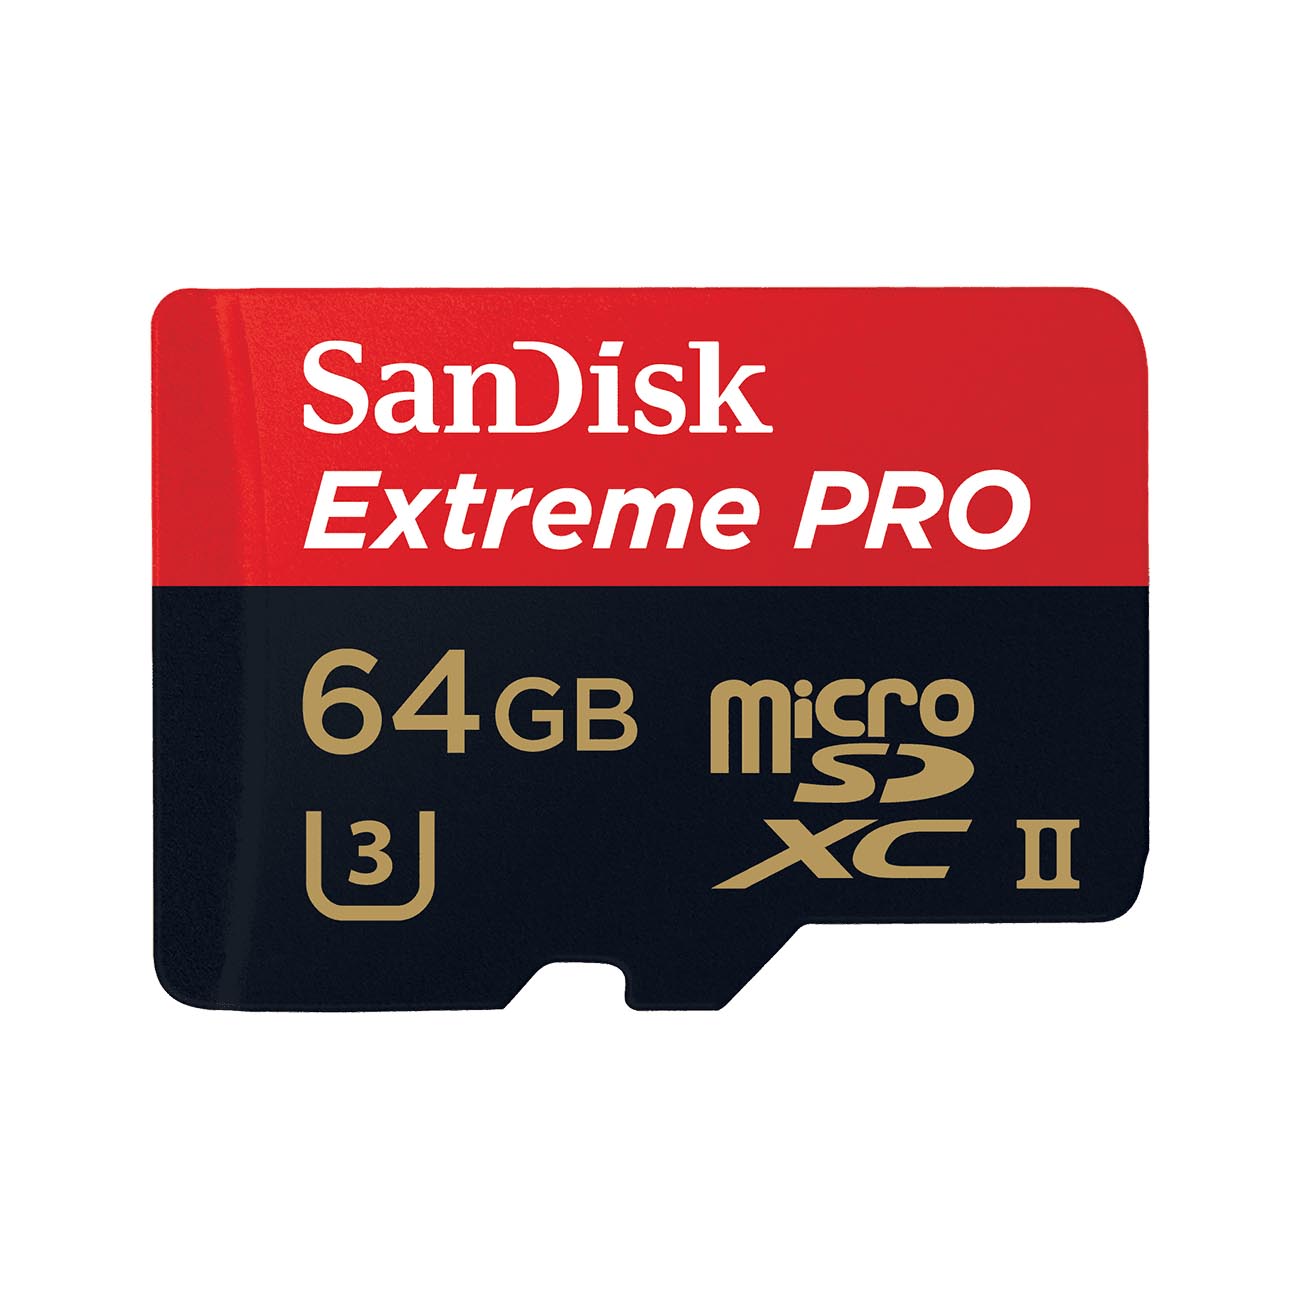 SanDisk Extreme Pro microSDXC UHS-II 64 GB Front